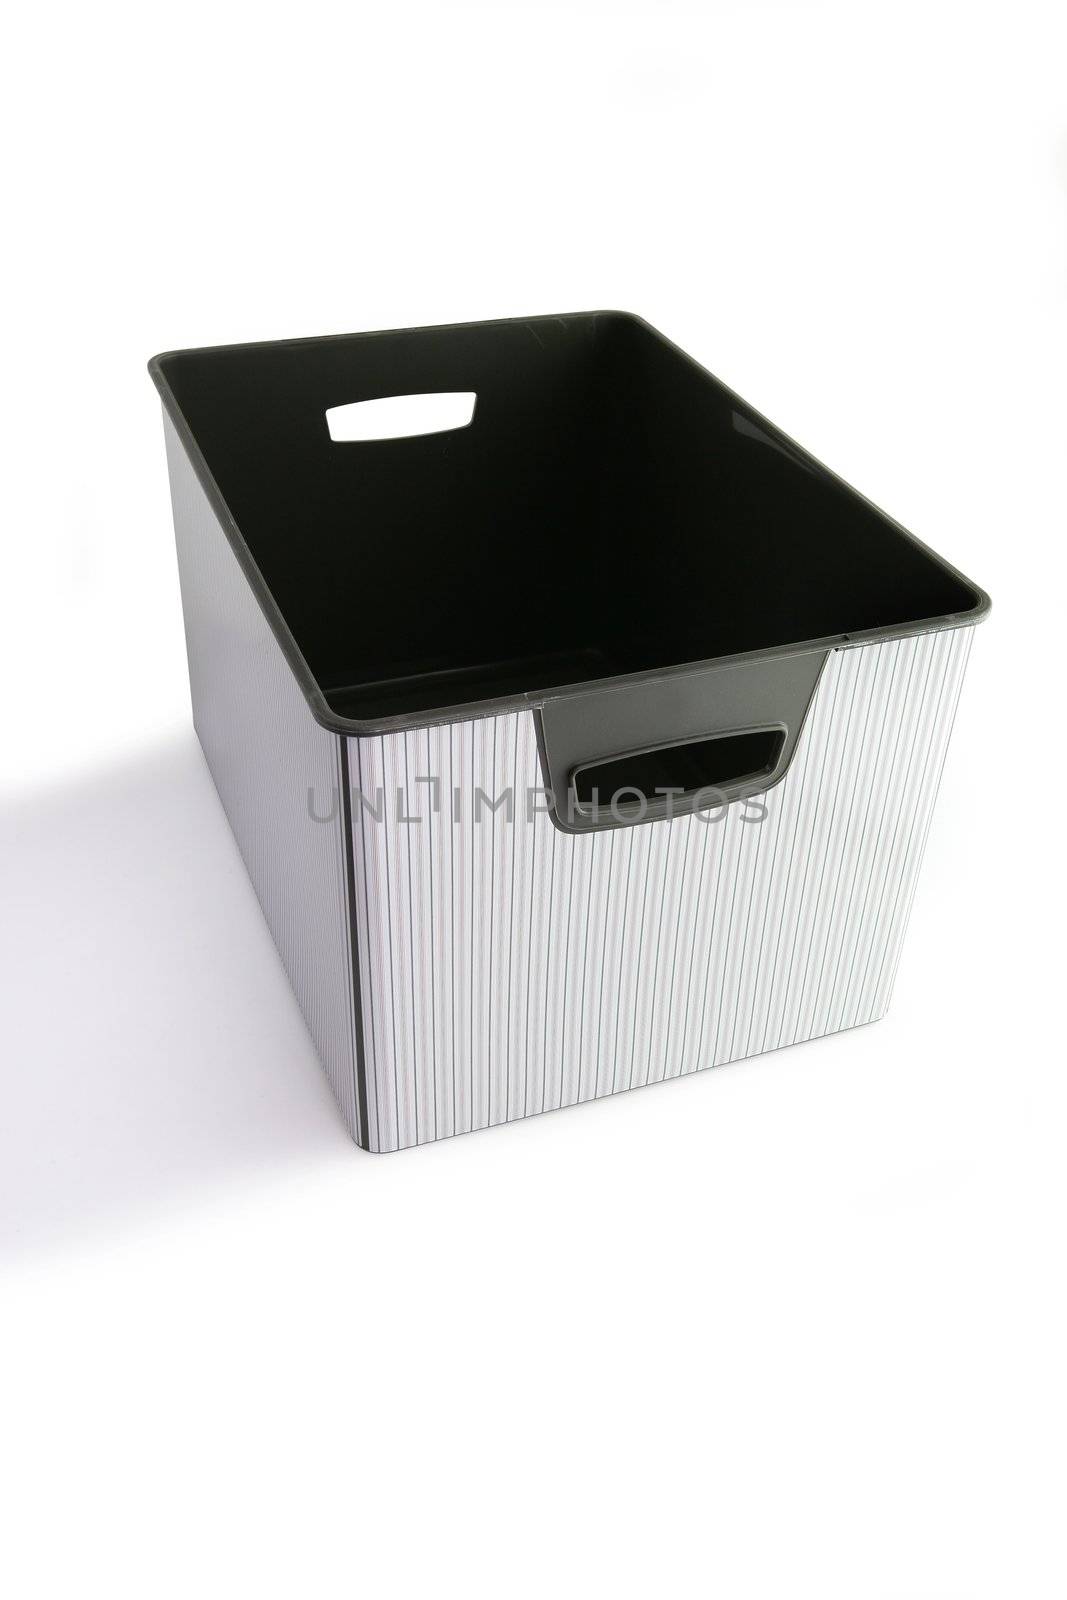 Storage box by phovoir